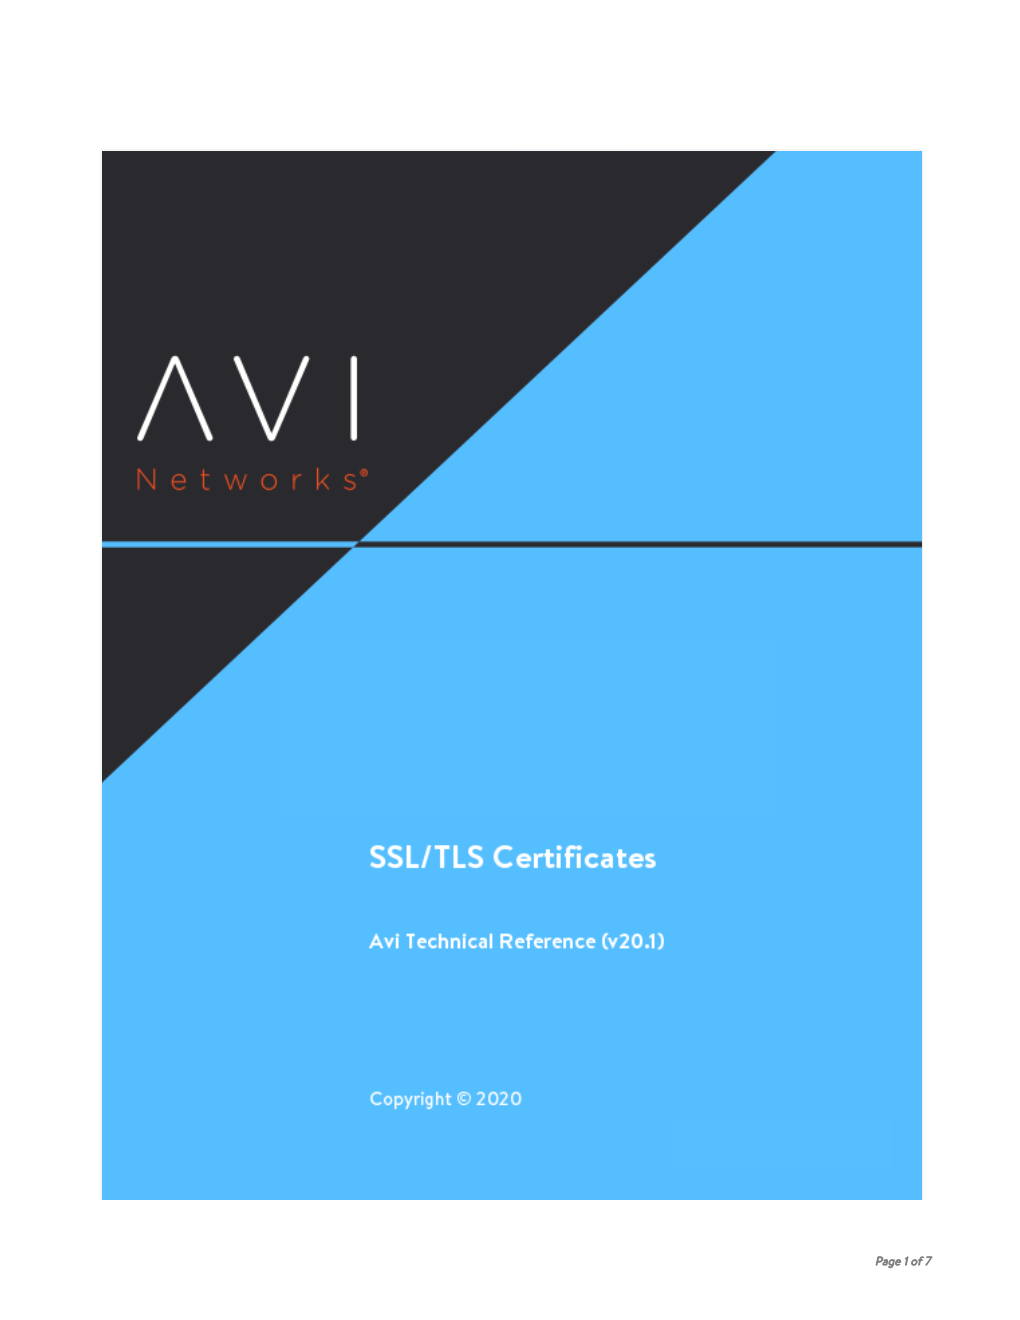 SSL/TLS Certificates Avi Networks — Technical Reference (20.1)